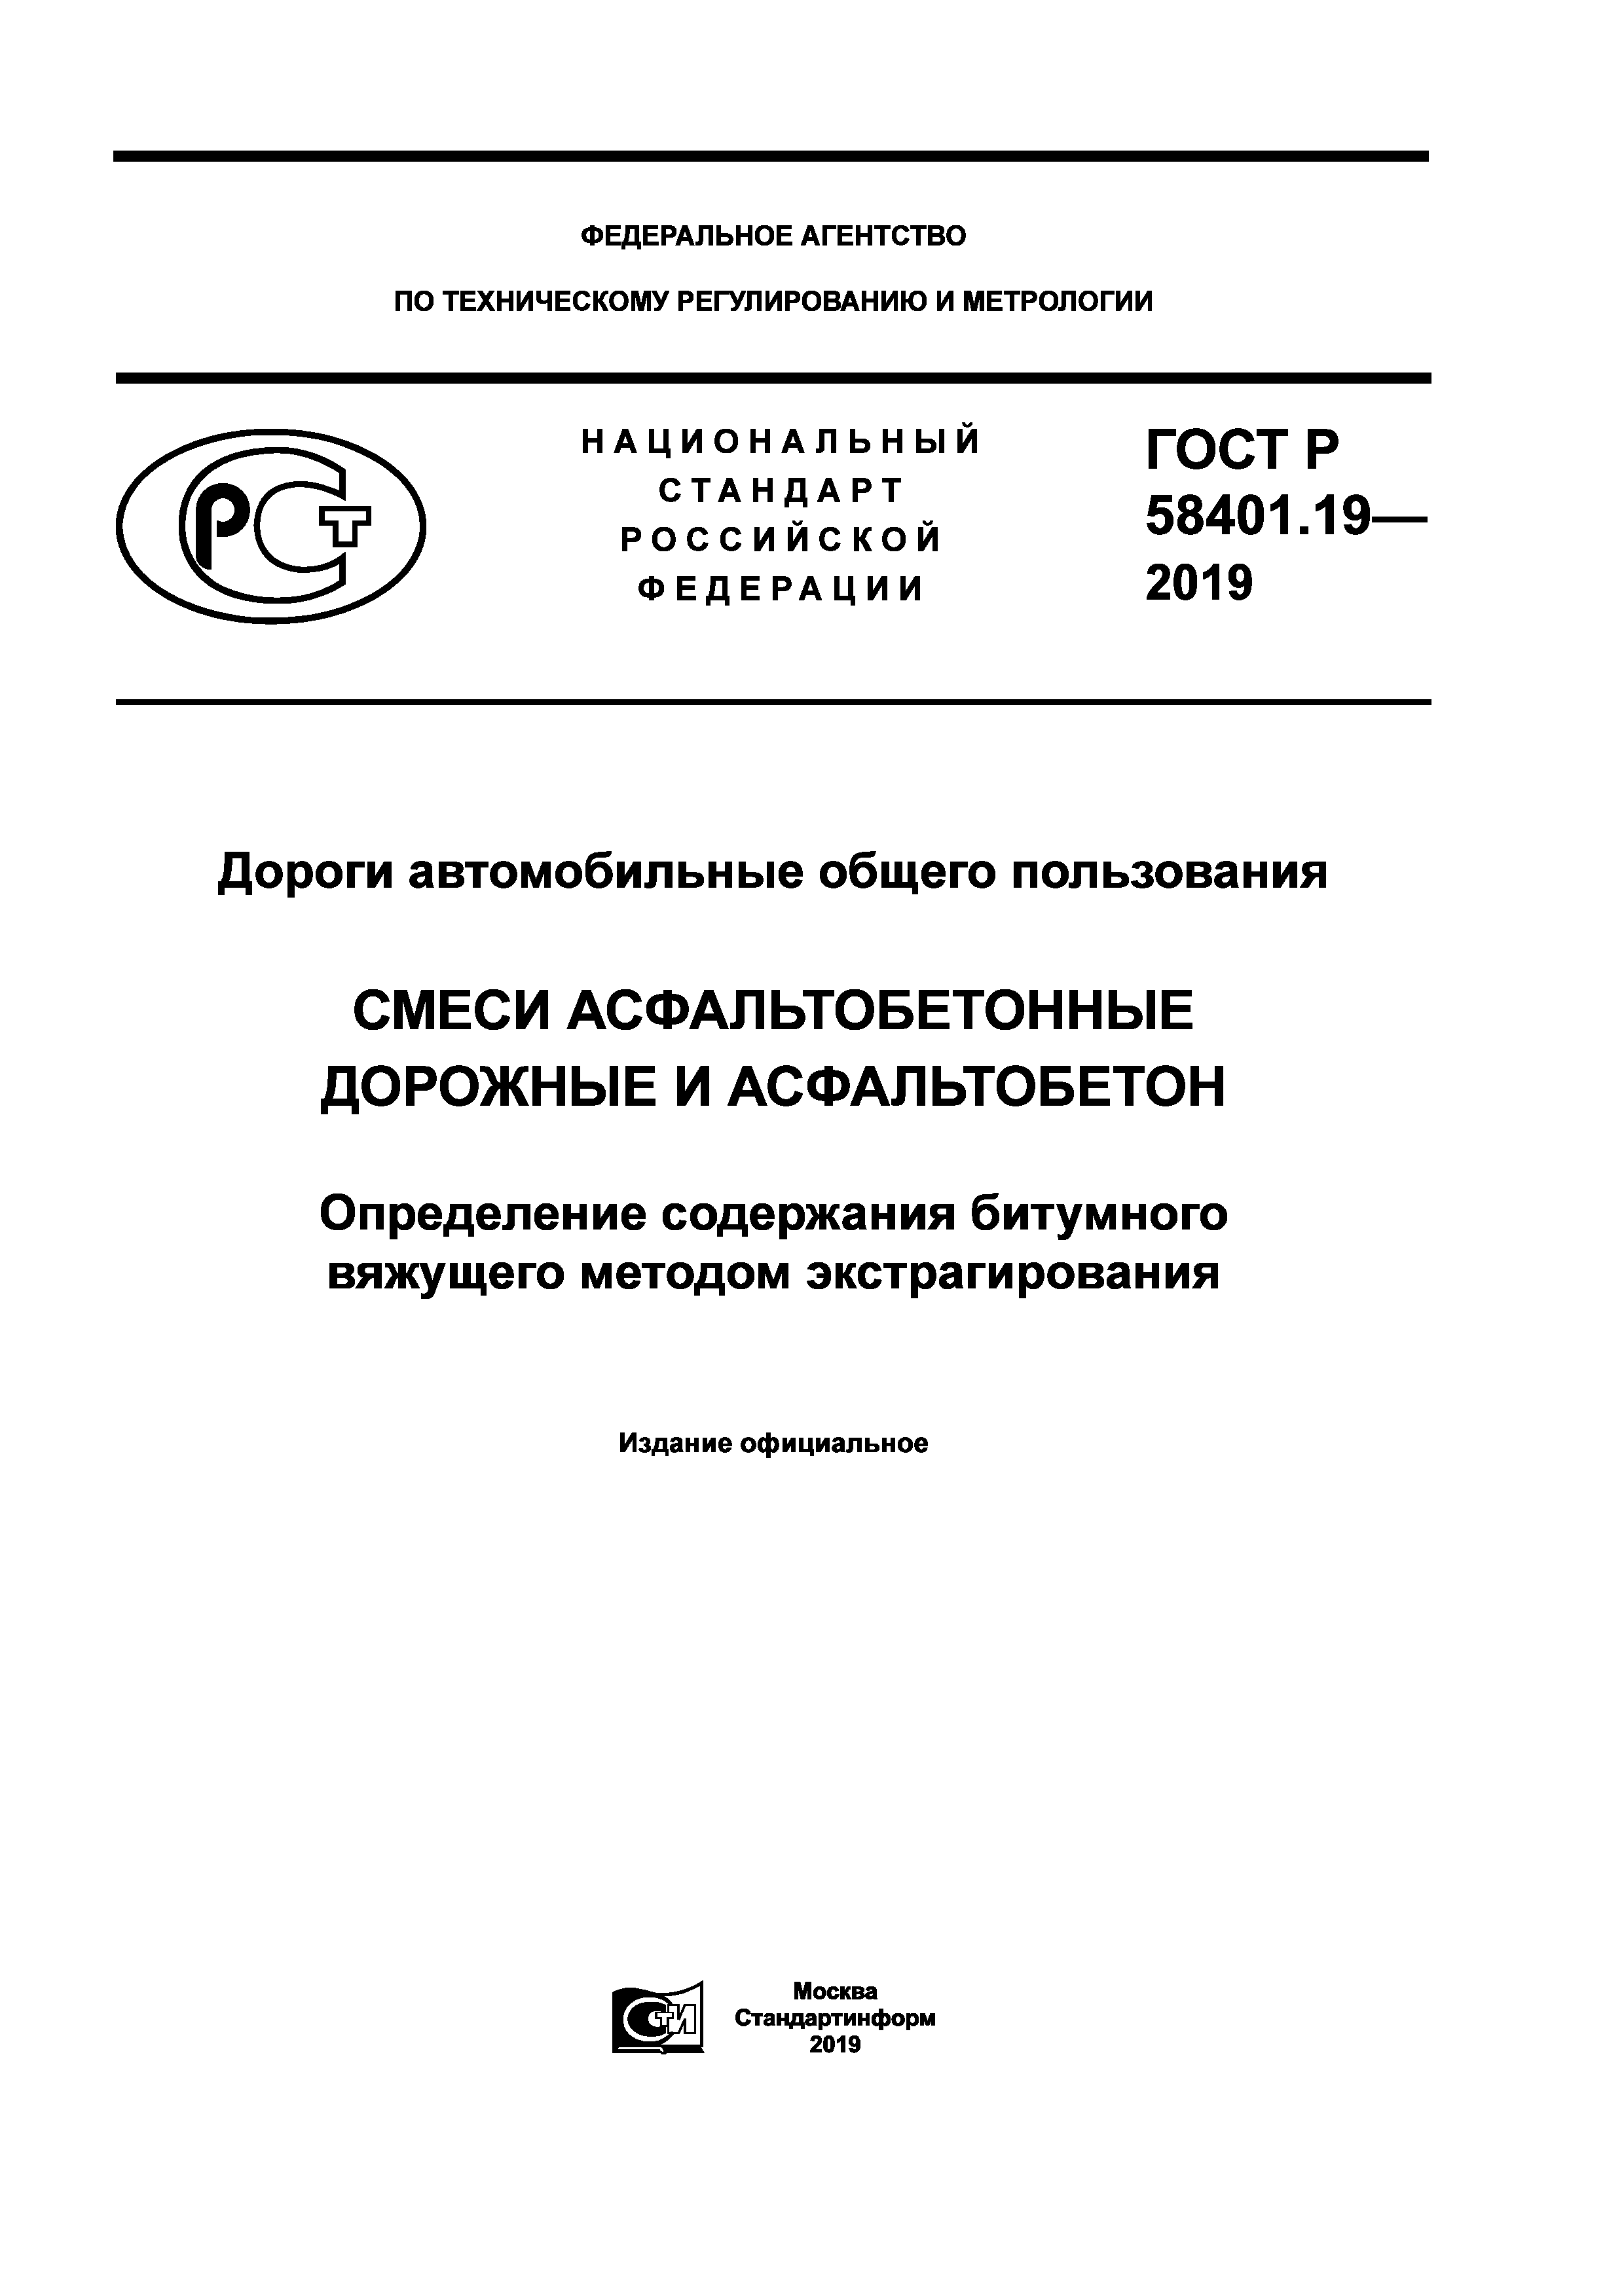 ГОСТ Р 58401.19-2019